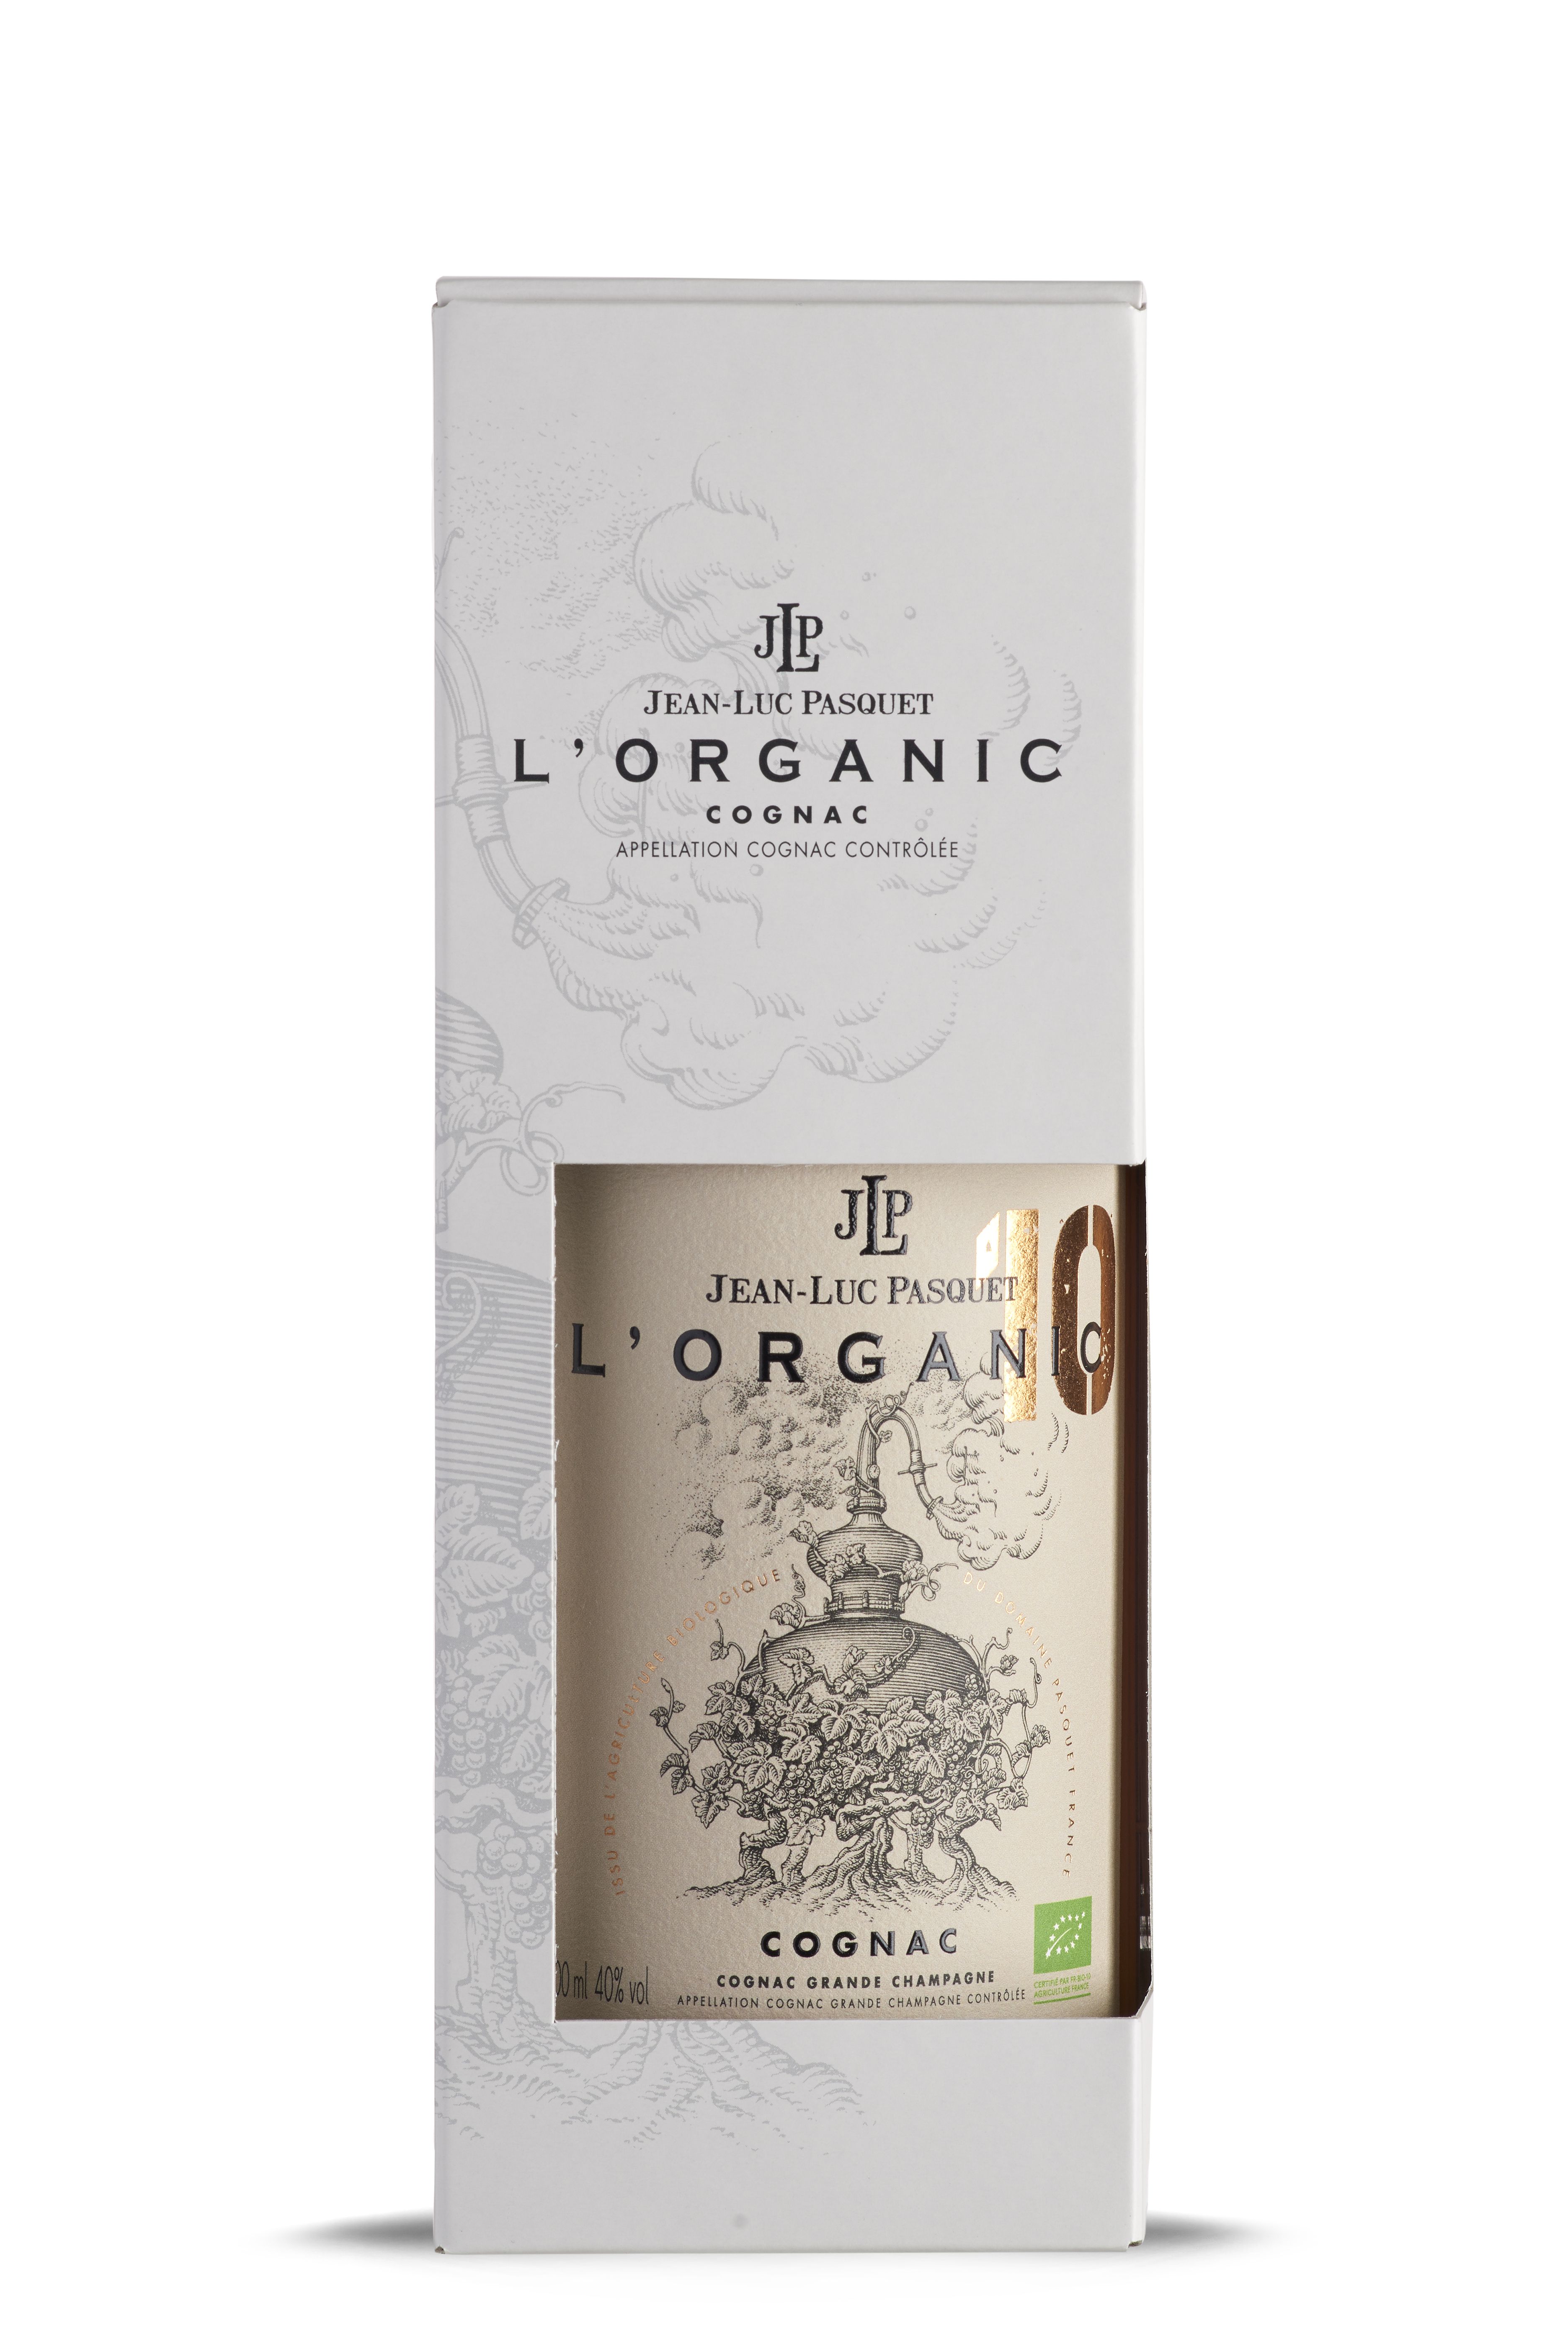 Jean-Luc Pasquet Cognac L'Organic 10 Jahre